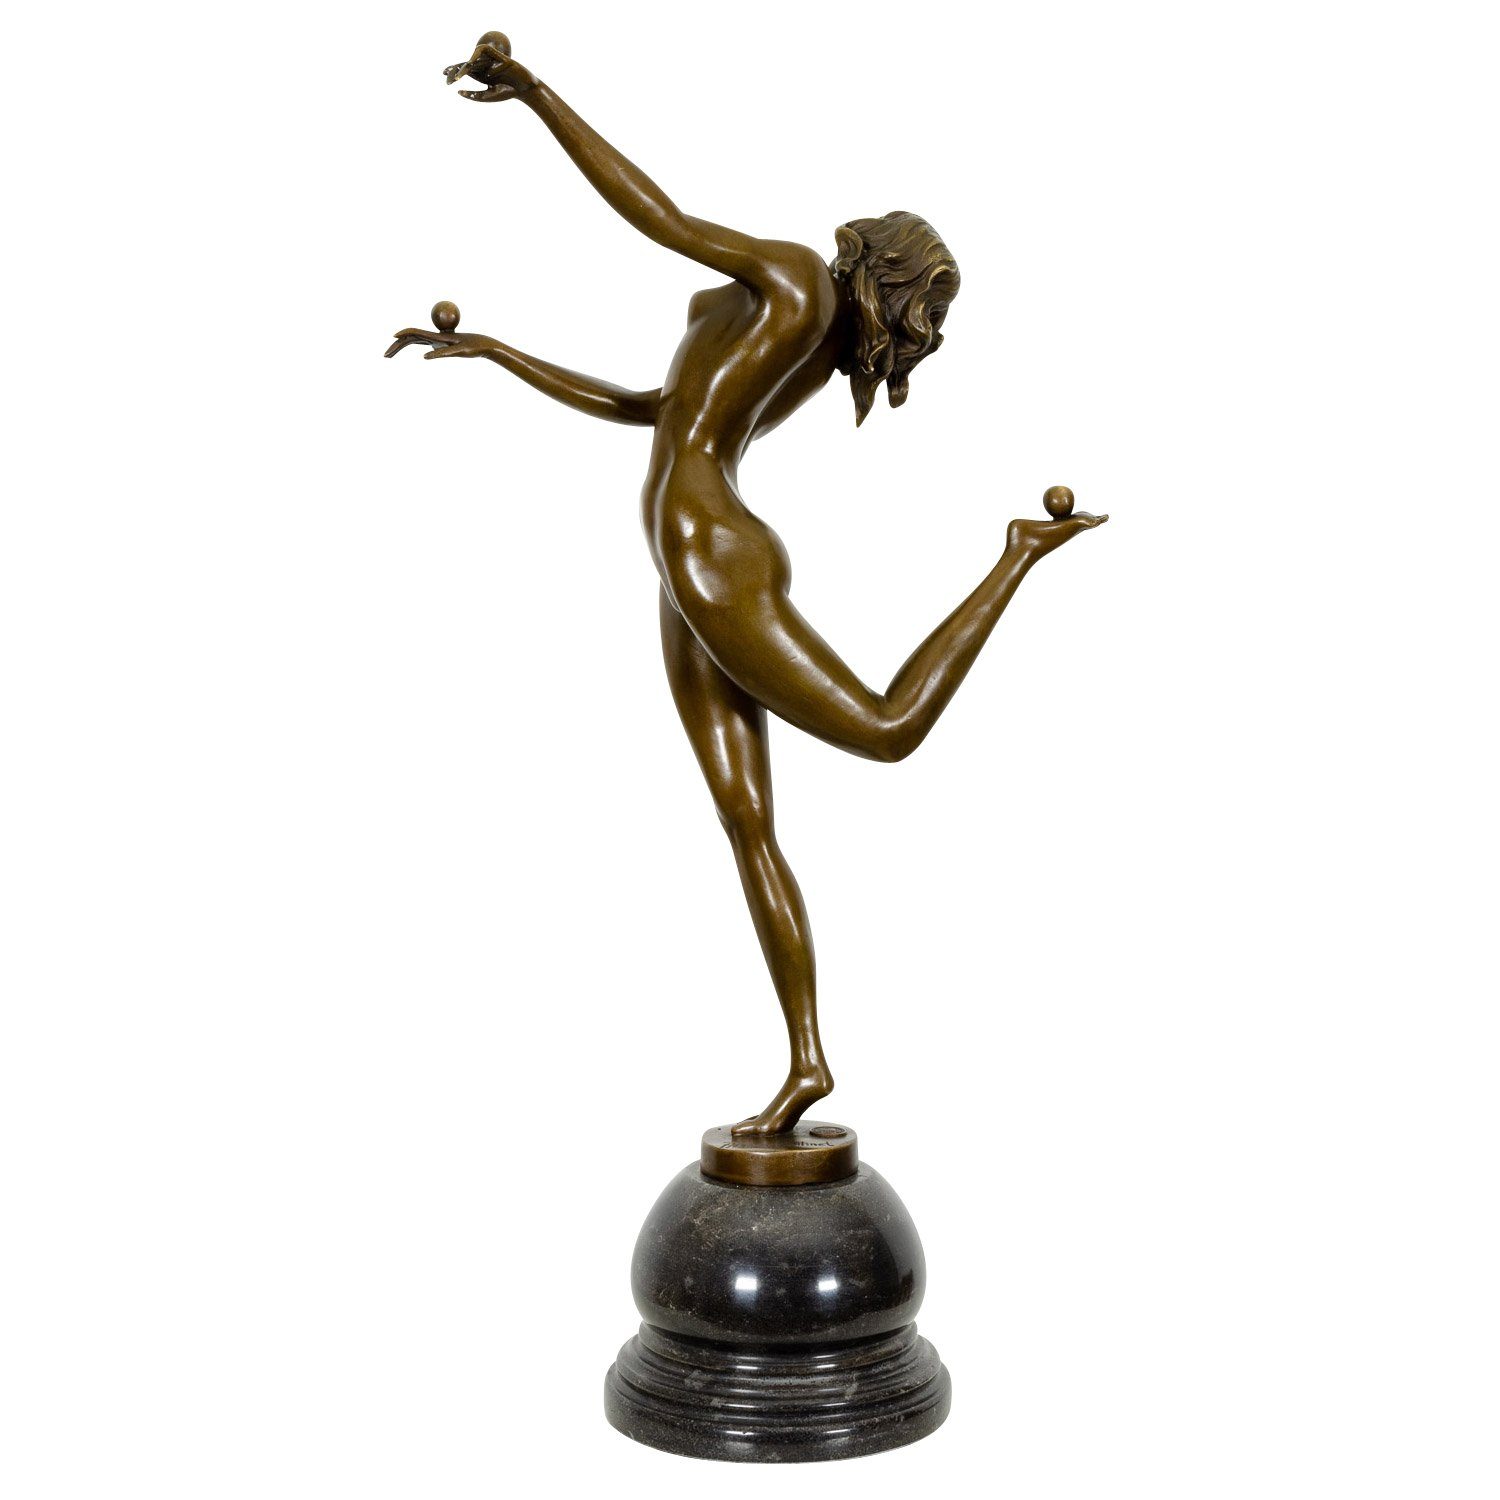 Aubaho Skulptur Bronzeskulptur Antik-Stil 54cm Akrobatin Figur im Frau Statue Bronze